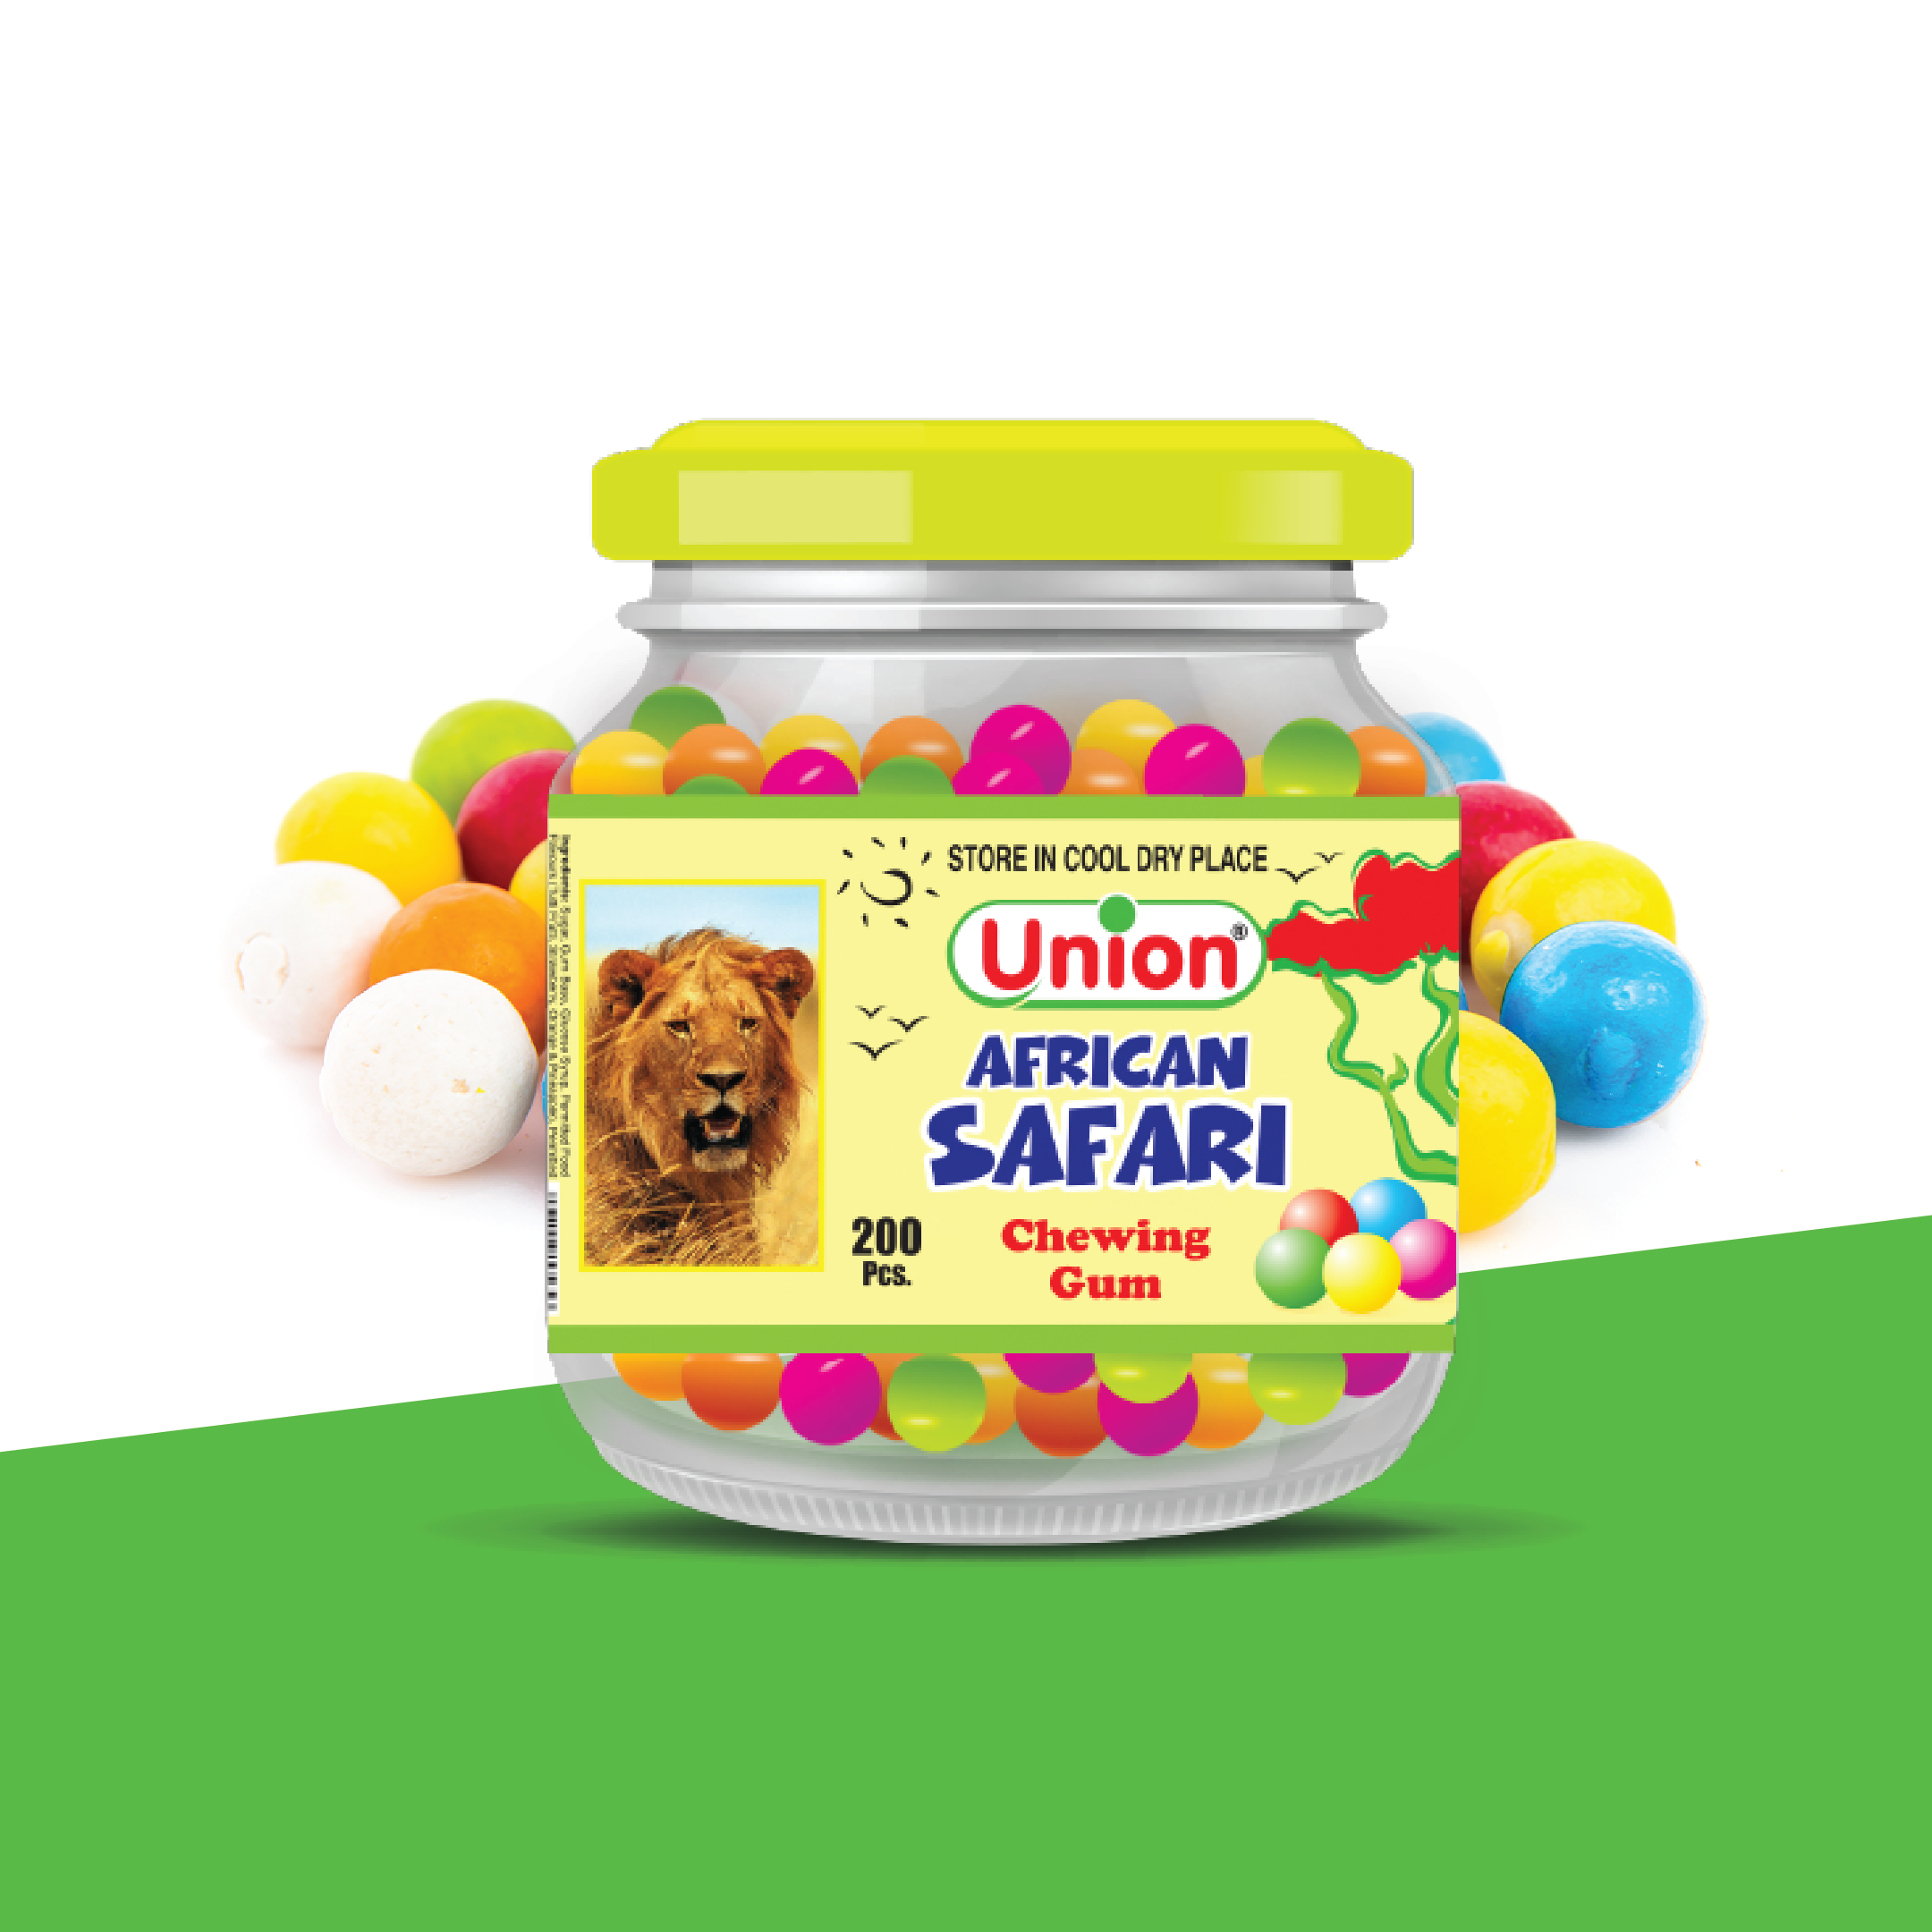 Union African Safari Chewing Gum